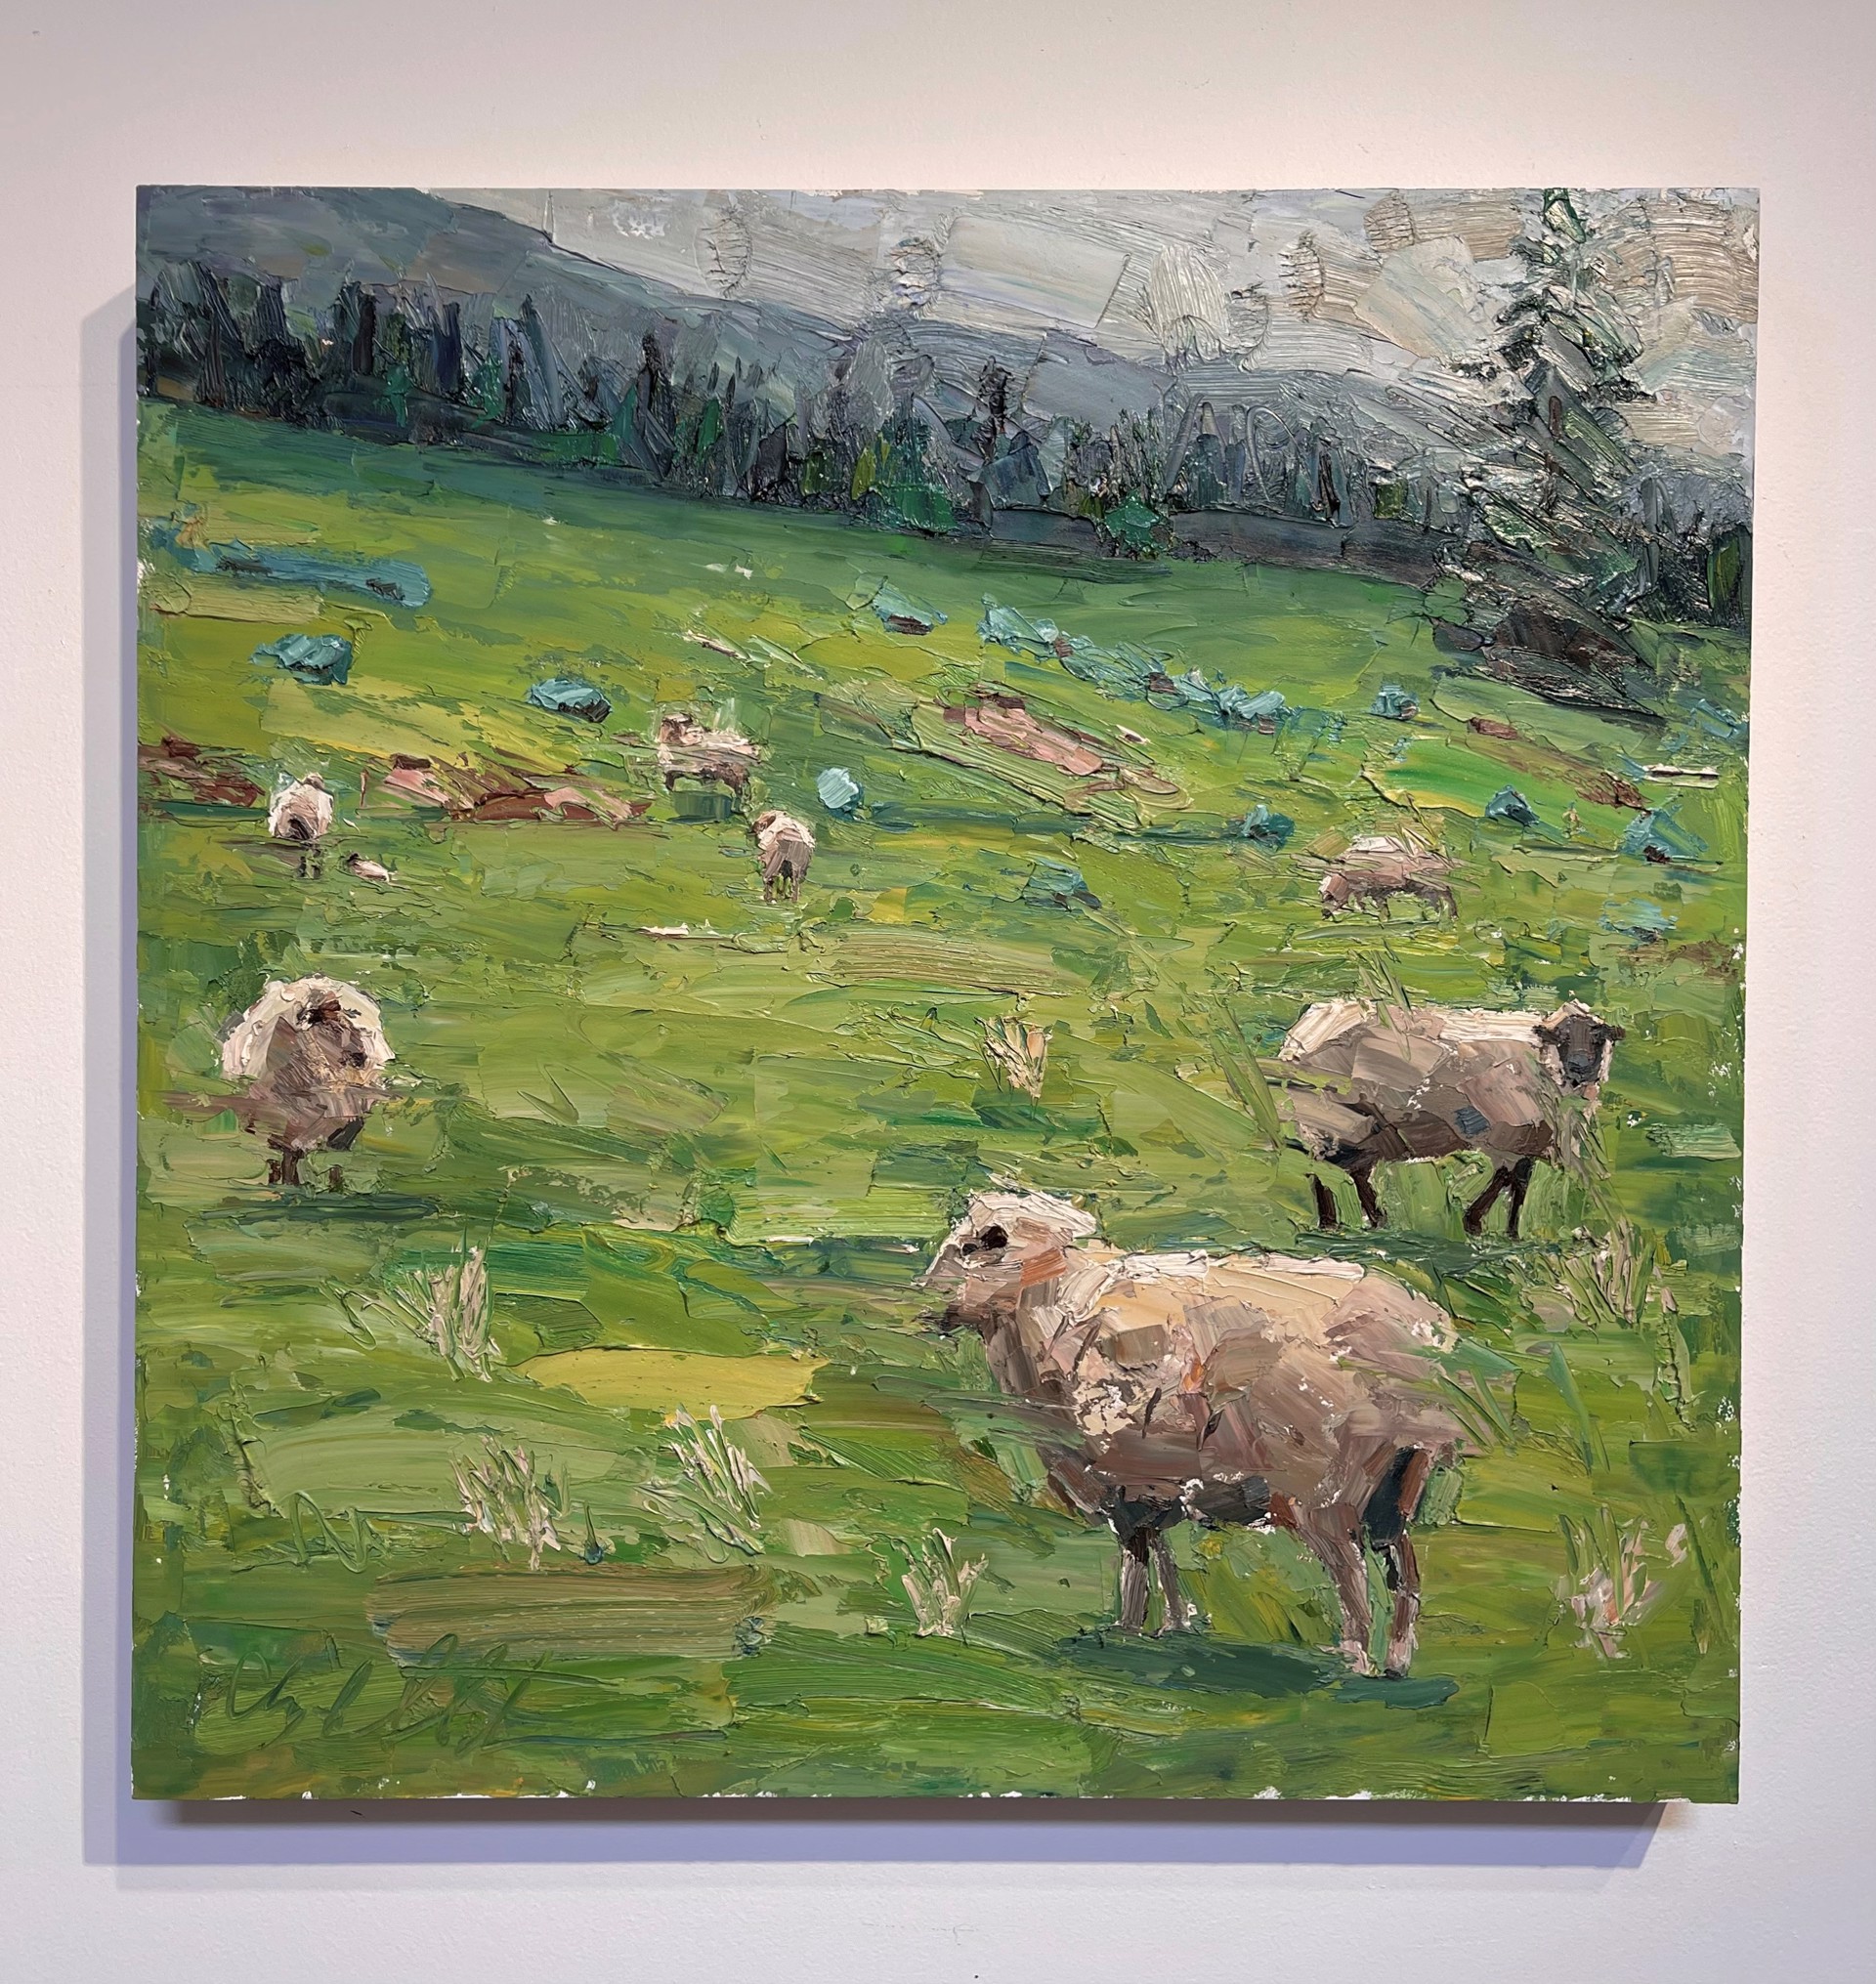 Sheepish by Clyde Steadman